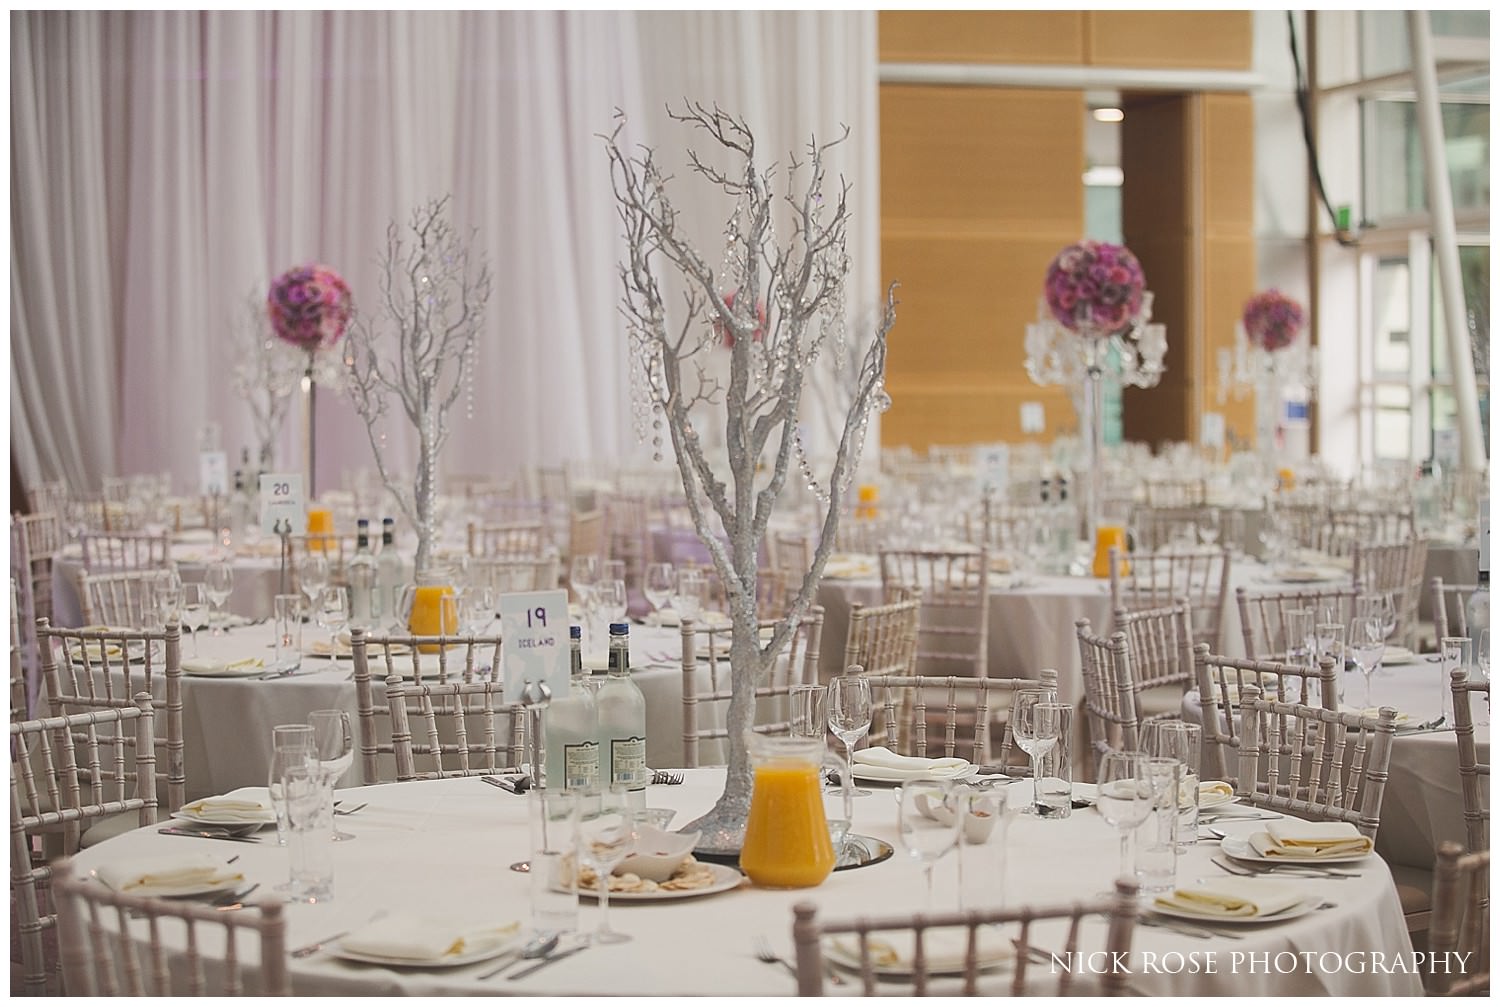  Table arrangement for an East Wintergarden Indian wedding in London 